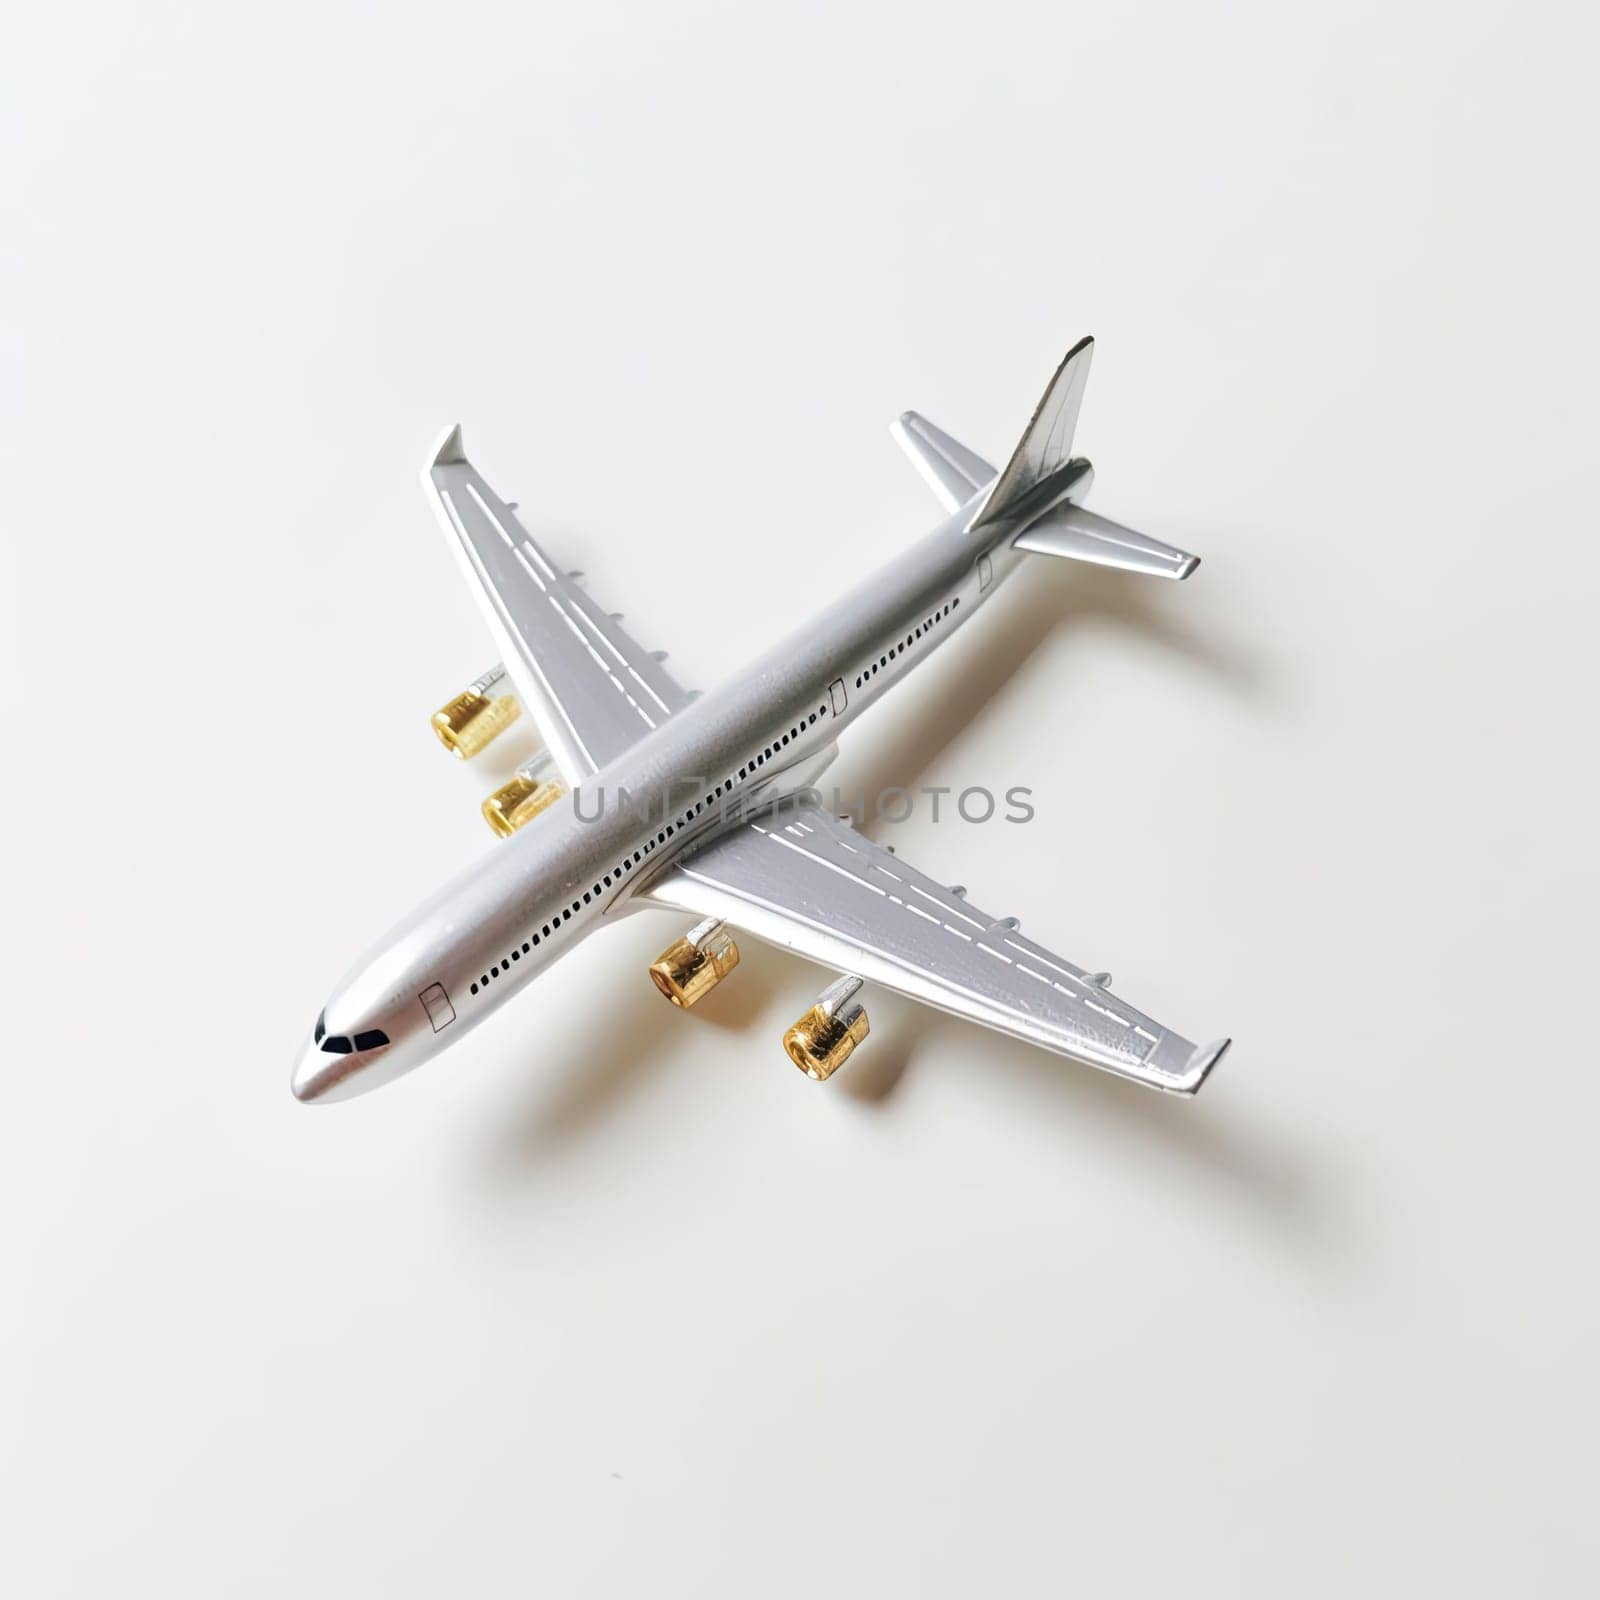 Airplane model on white background - top view - travel concept by eduardobellotto